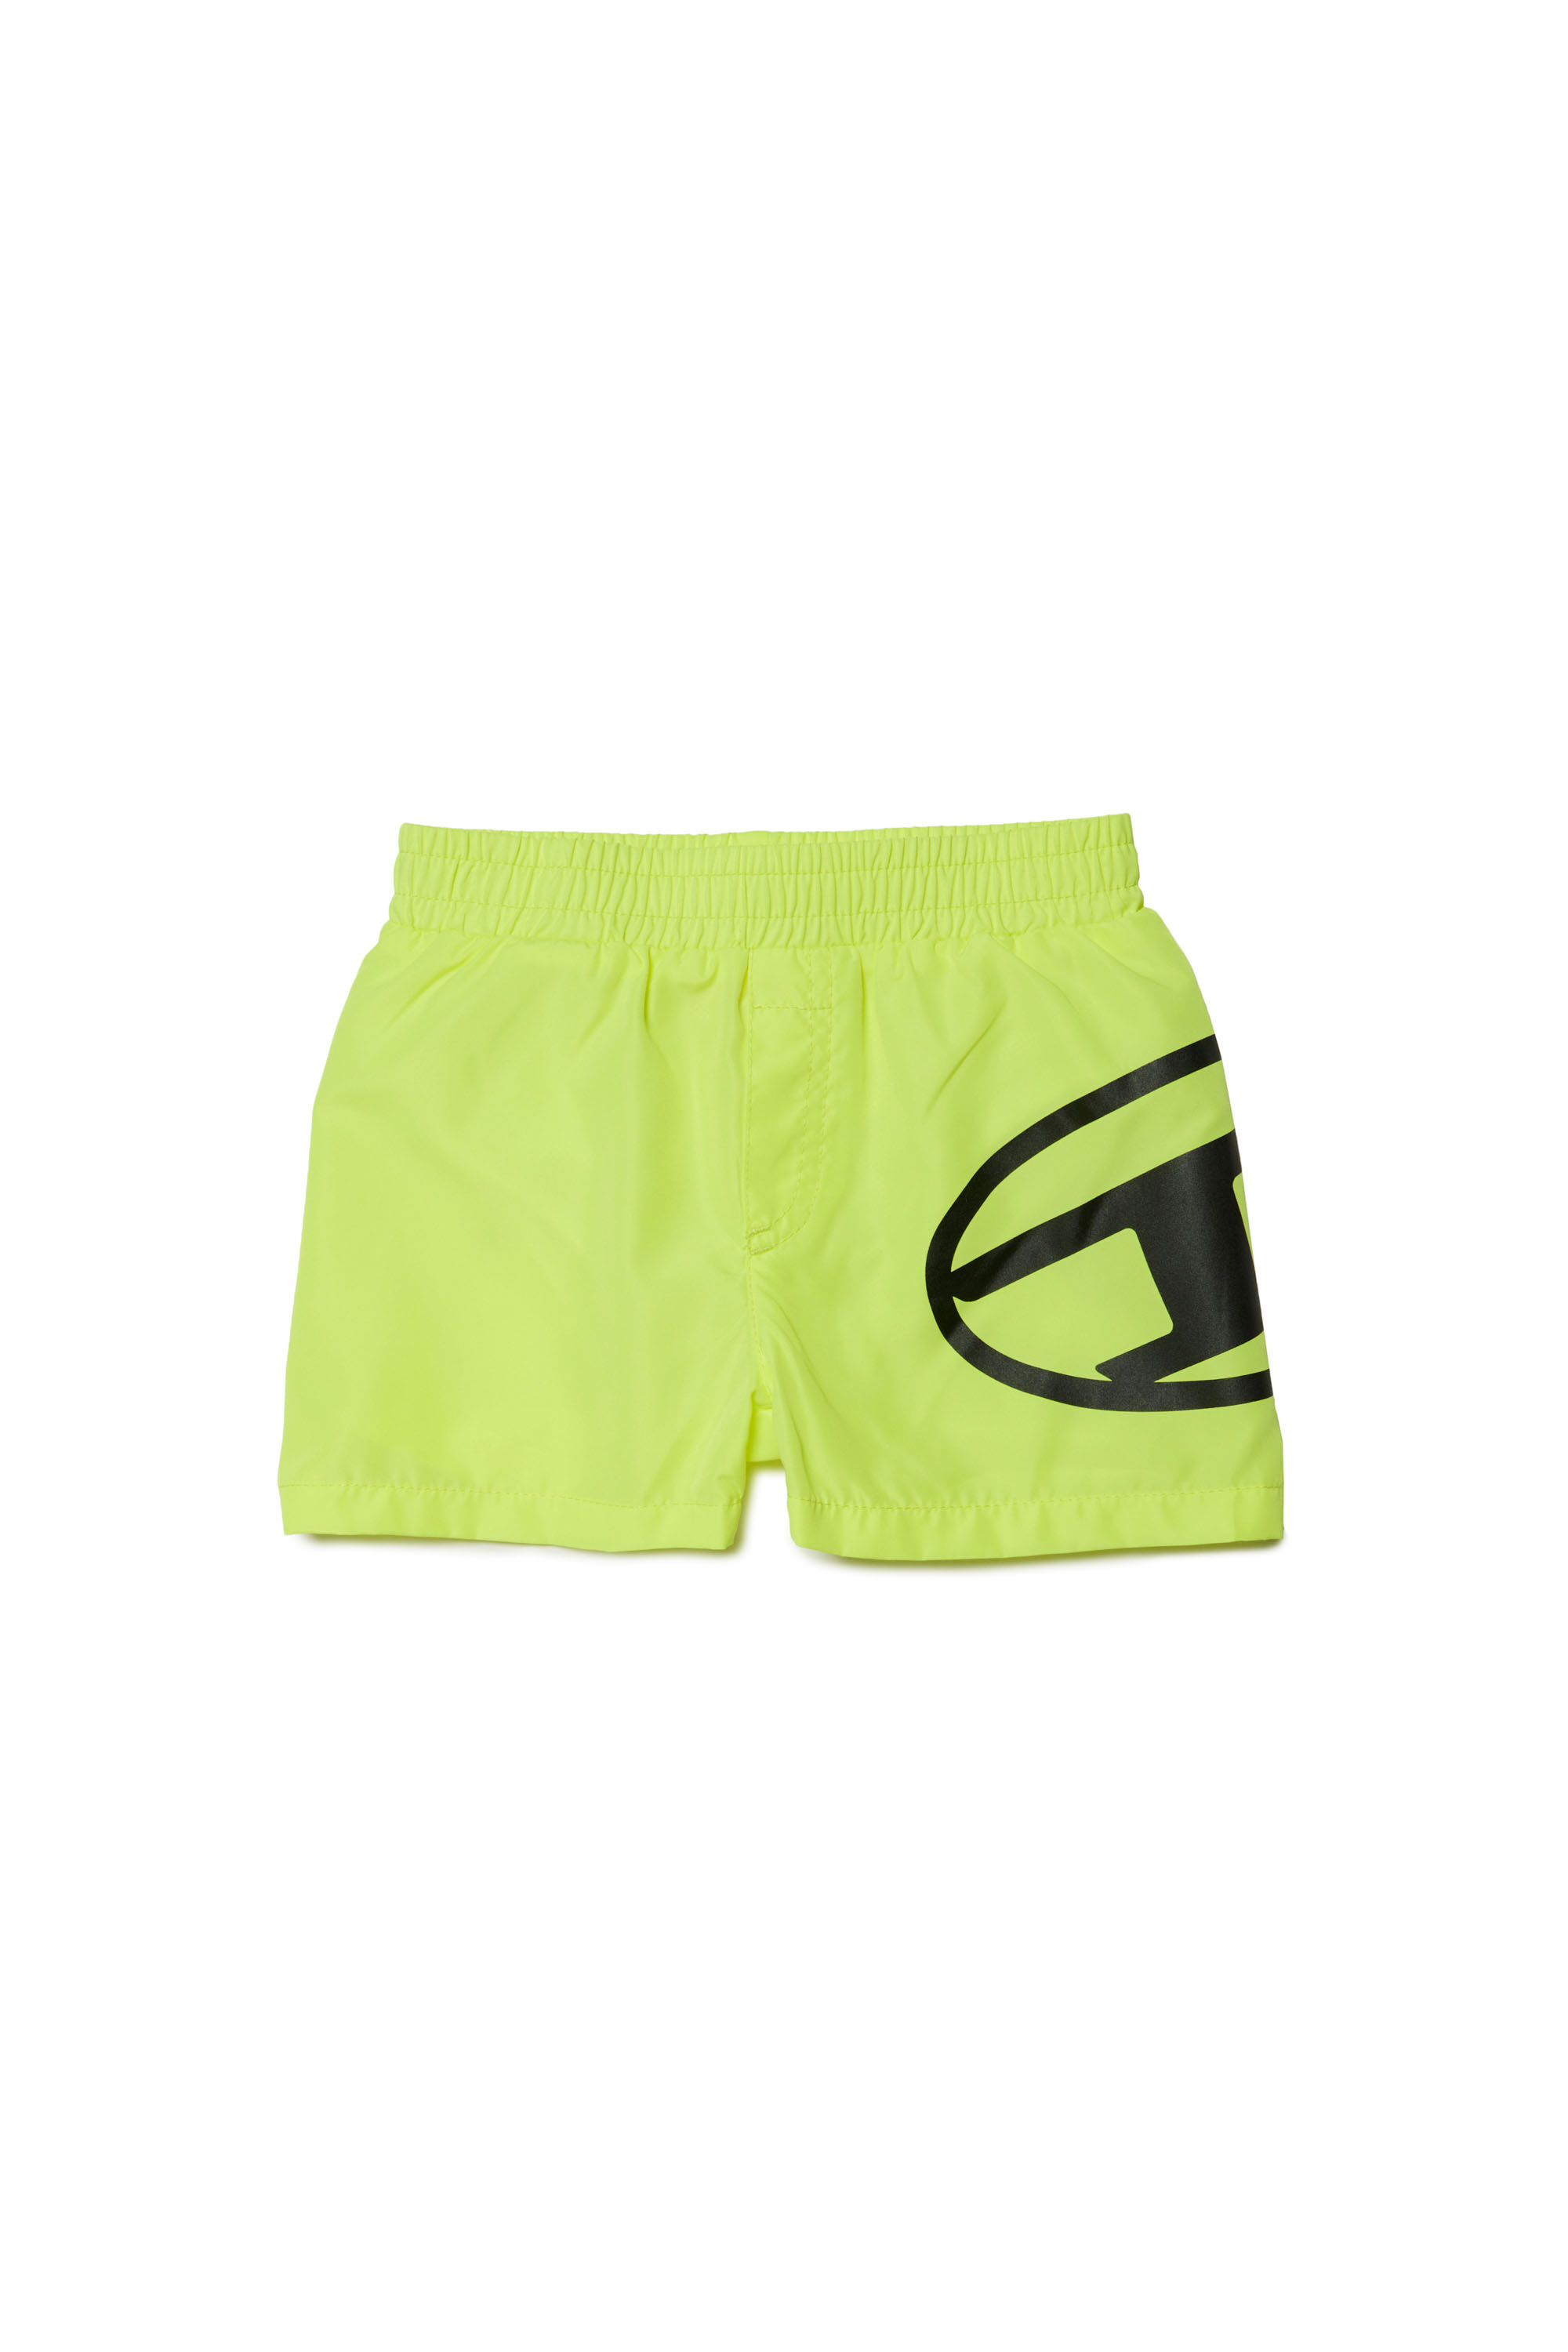 Diesel - MRULB, Man Swim shorts with Oval D logo in Yellow - Image 1